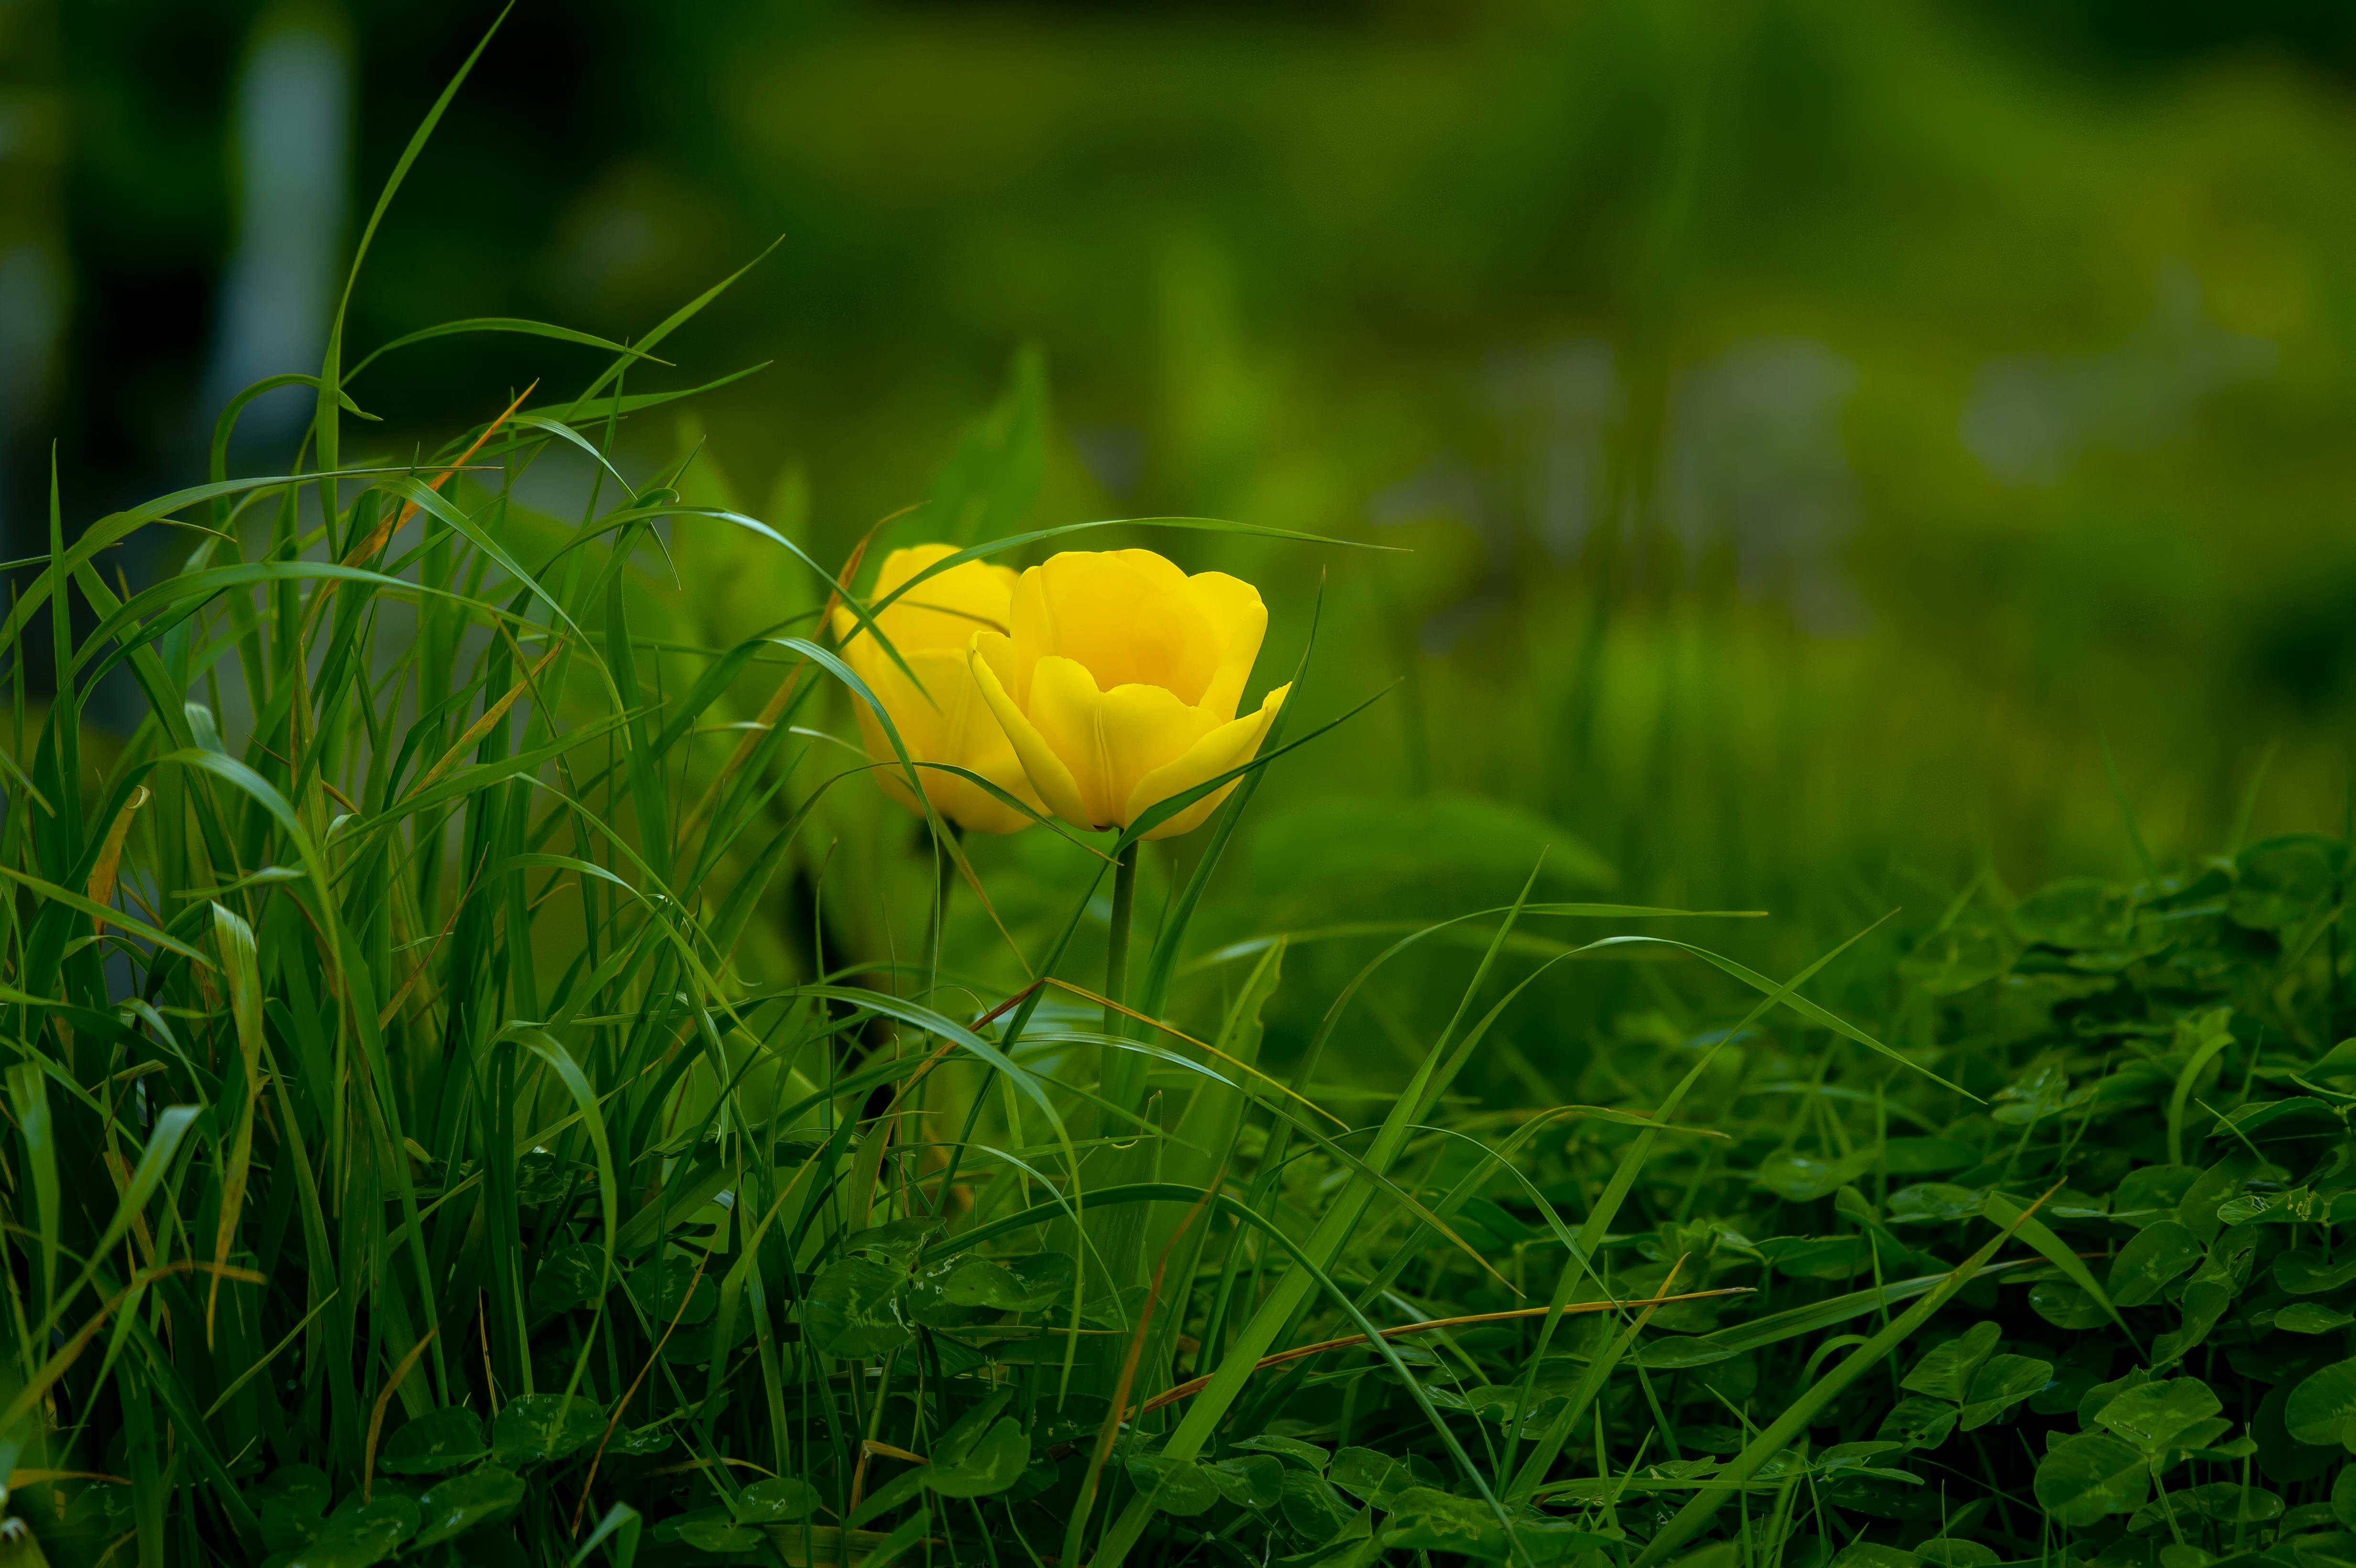 a yellow flower in grass